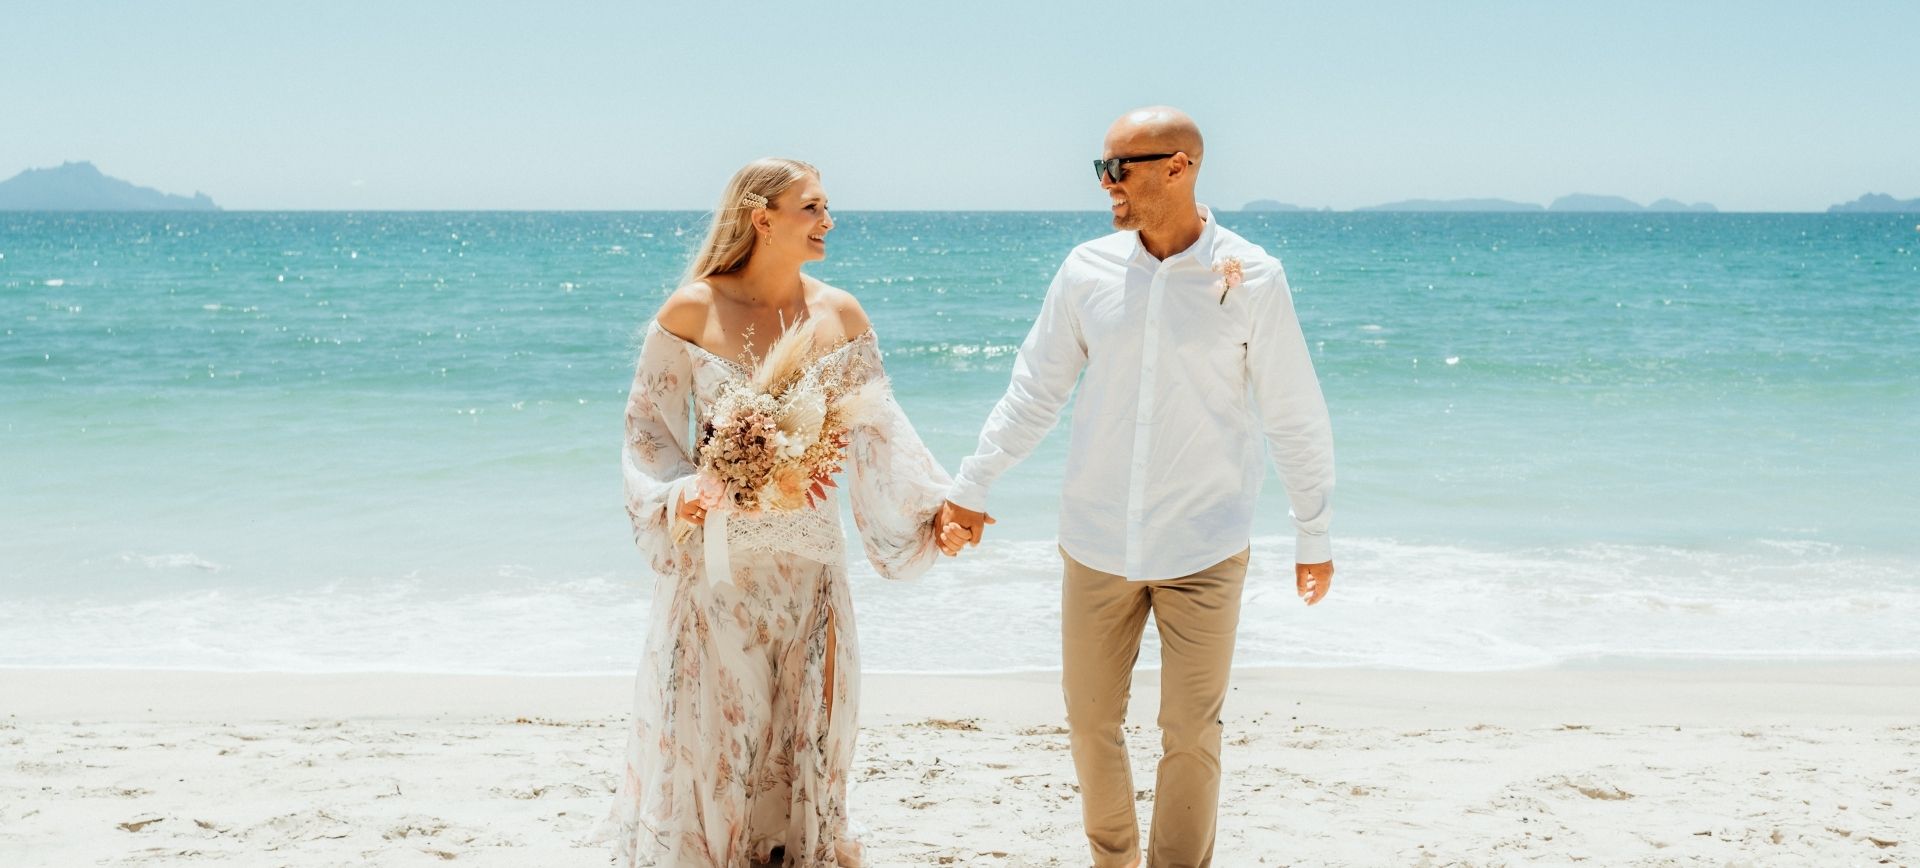 Elopement in New Zealand - Beach & Sand Dune Wedding in Northland